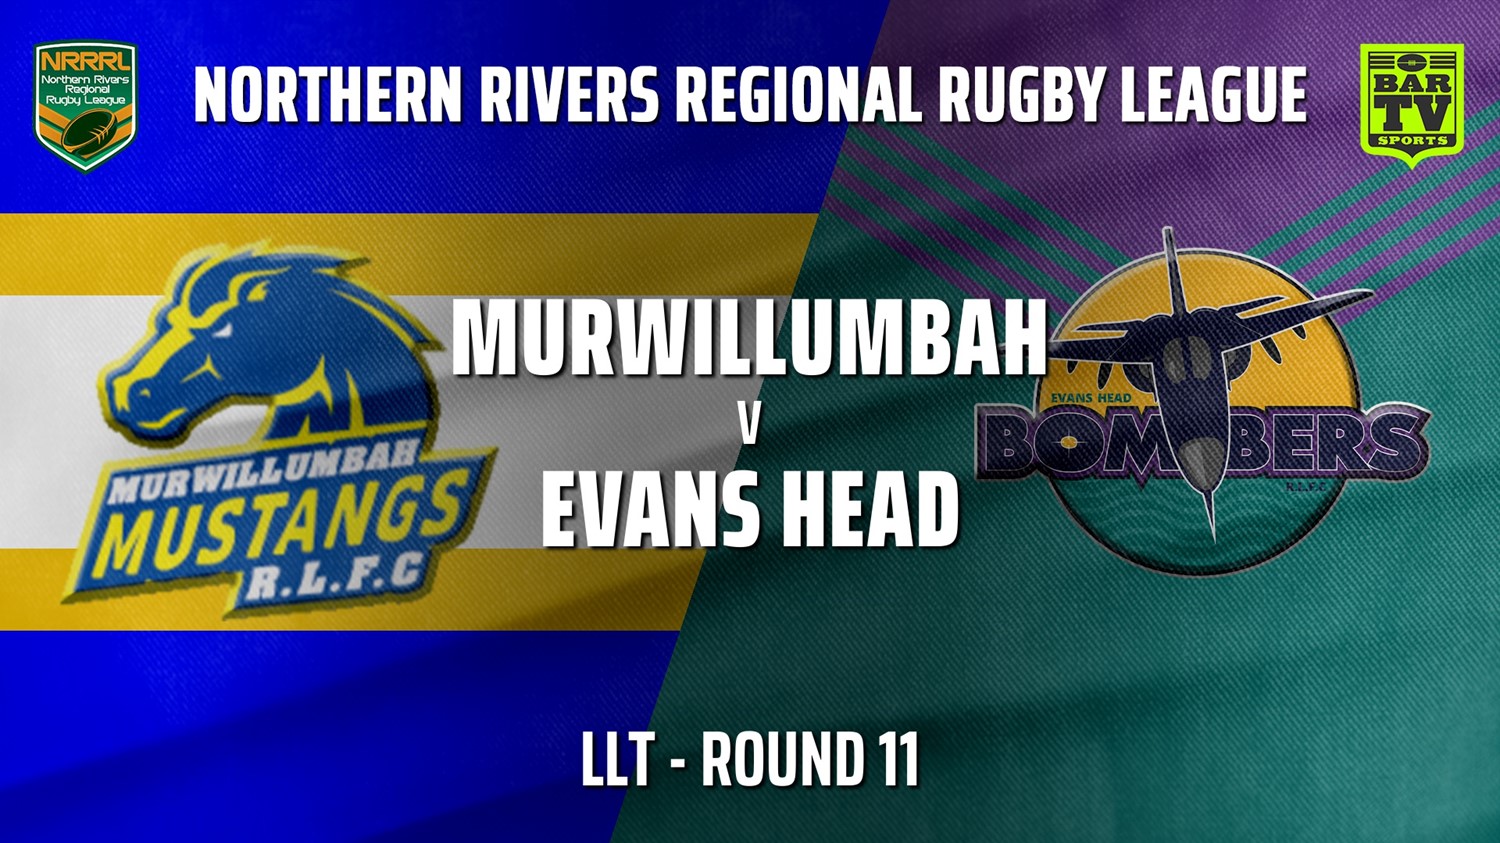 210717-Northern Rivers Round 11 - LLT - Murwillumbah Mustangs v Evans Head Bombers Slate Image